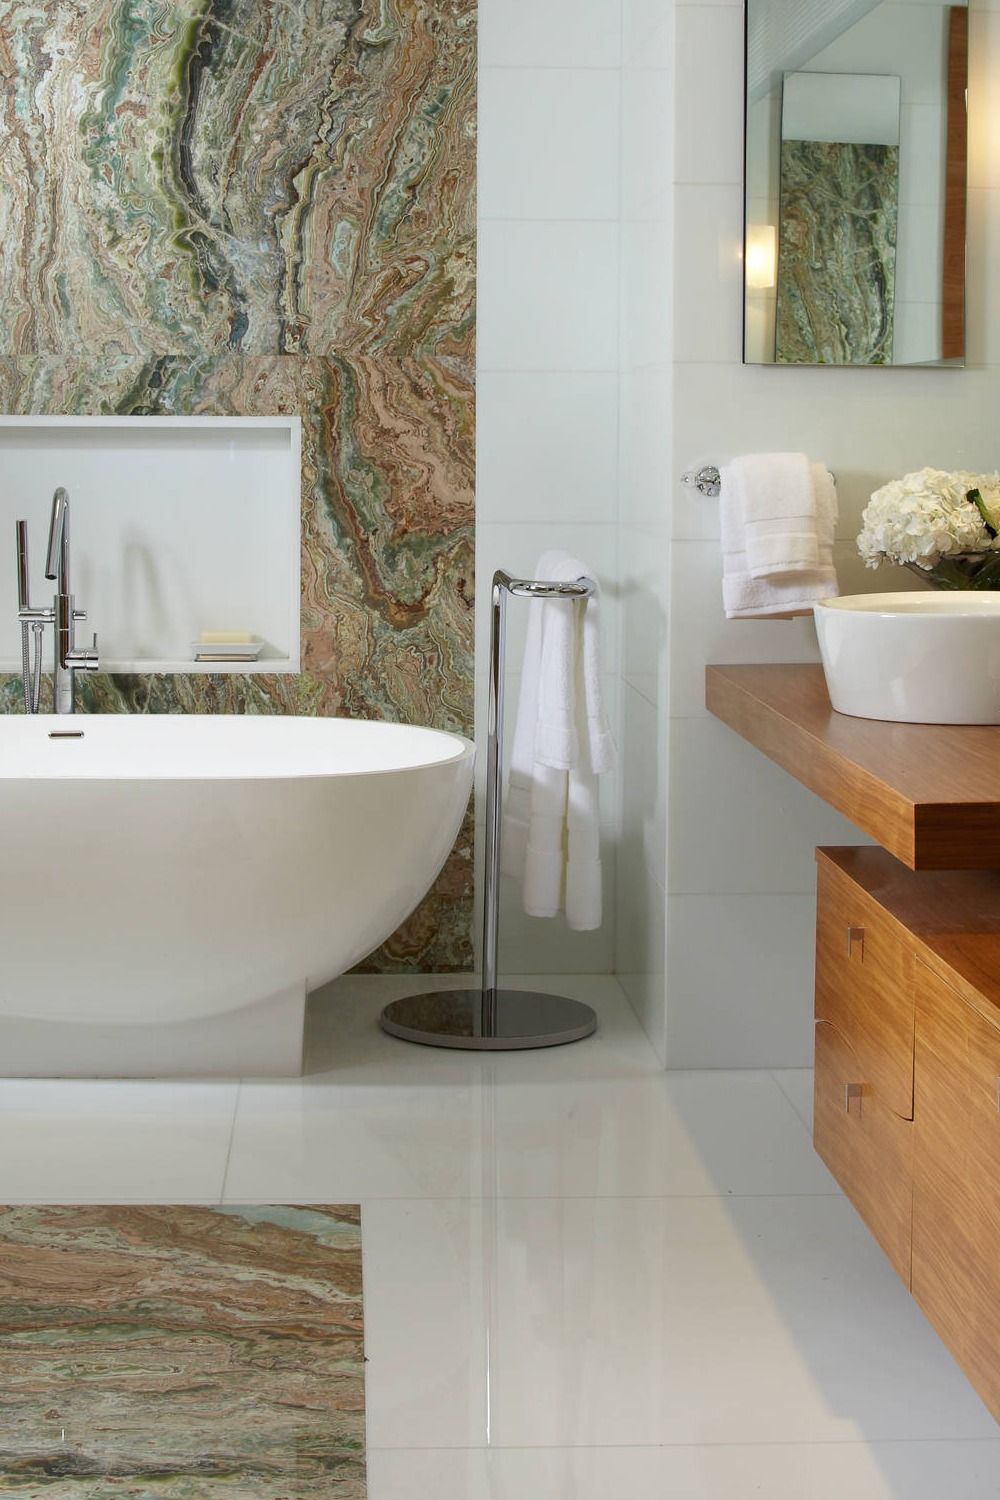 Multicolored Floor Tiles Freestanding Bathtub Vessel Sink Flat Panel Cabinets Brown Countertops